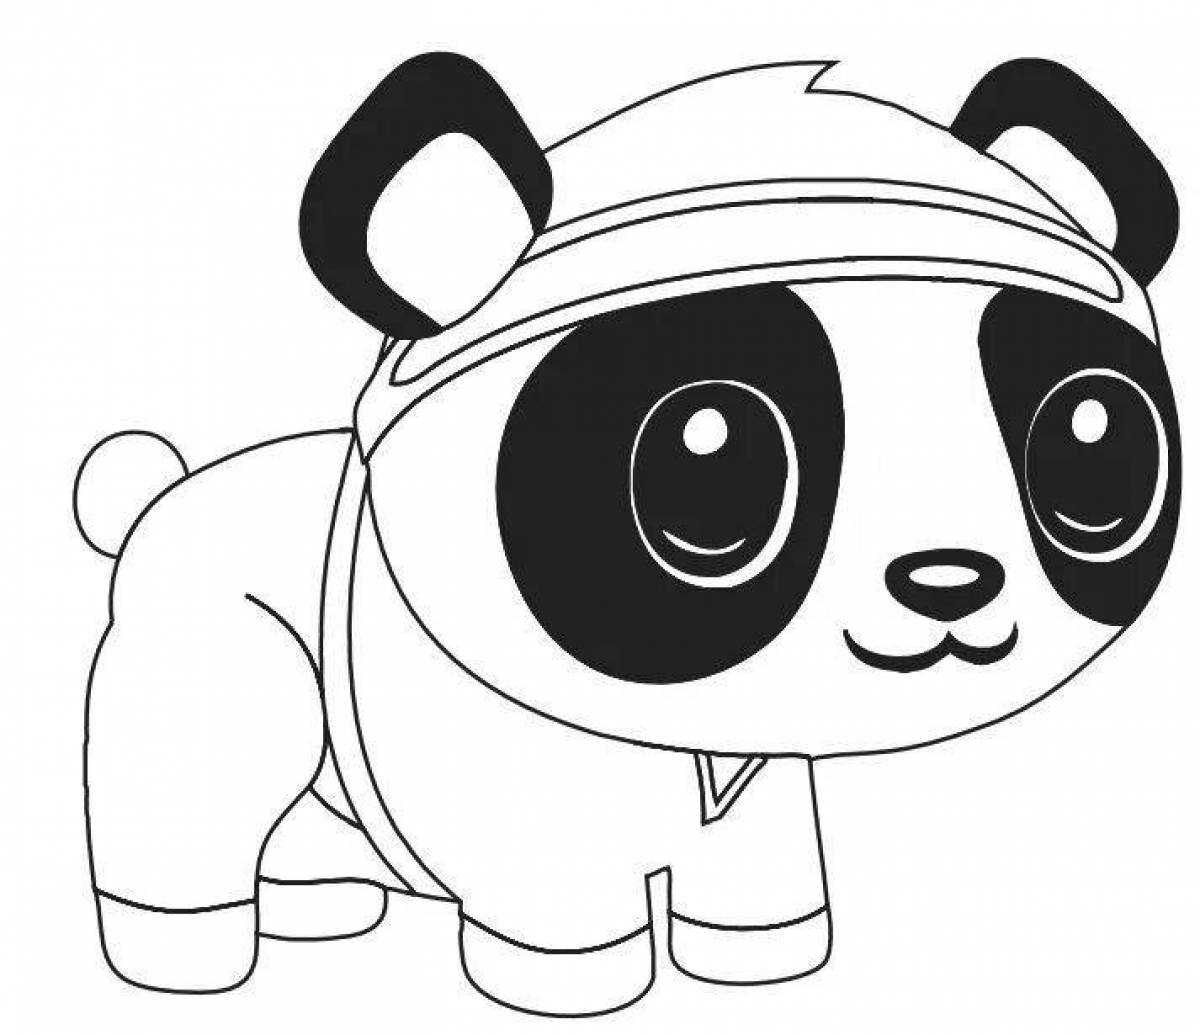 Coloring page smiling cute panda